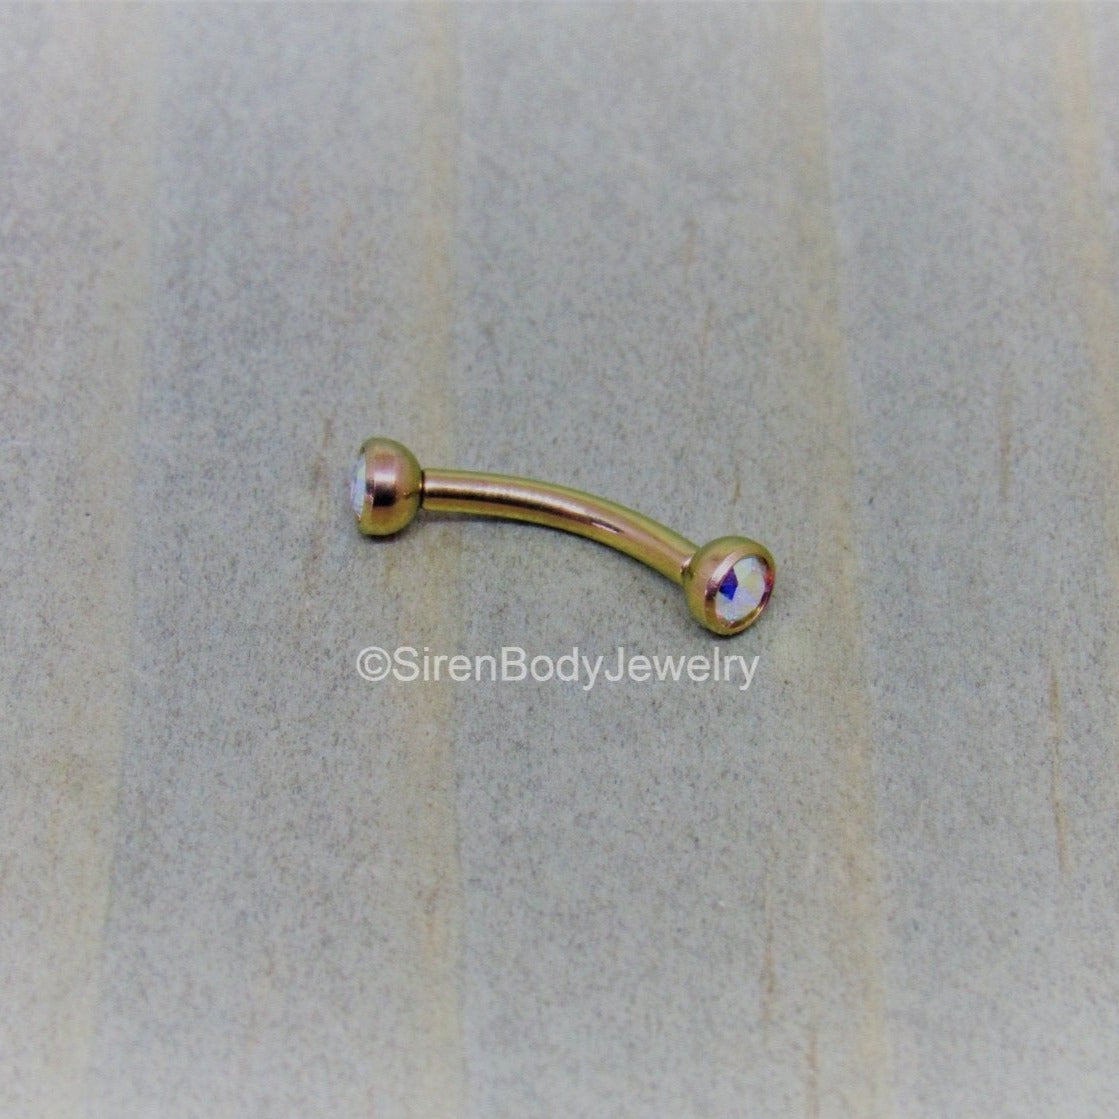 16g 3mm aurora borealis gemstone curved piercing barbell 5/16"